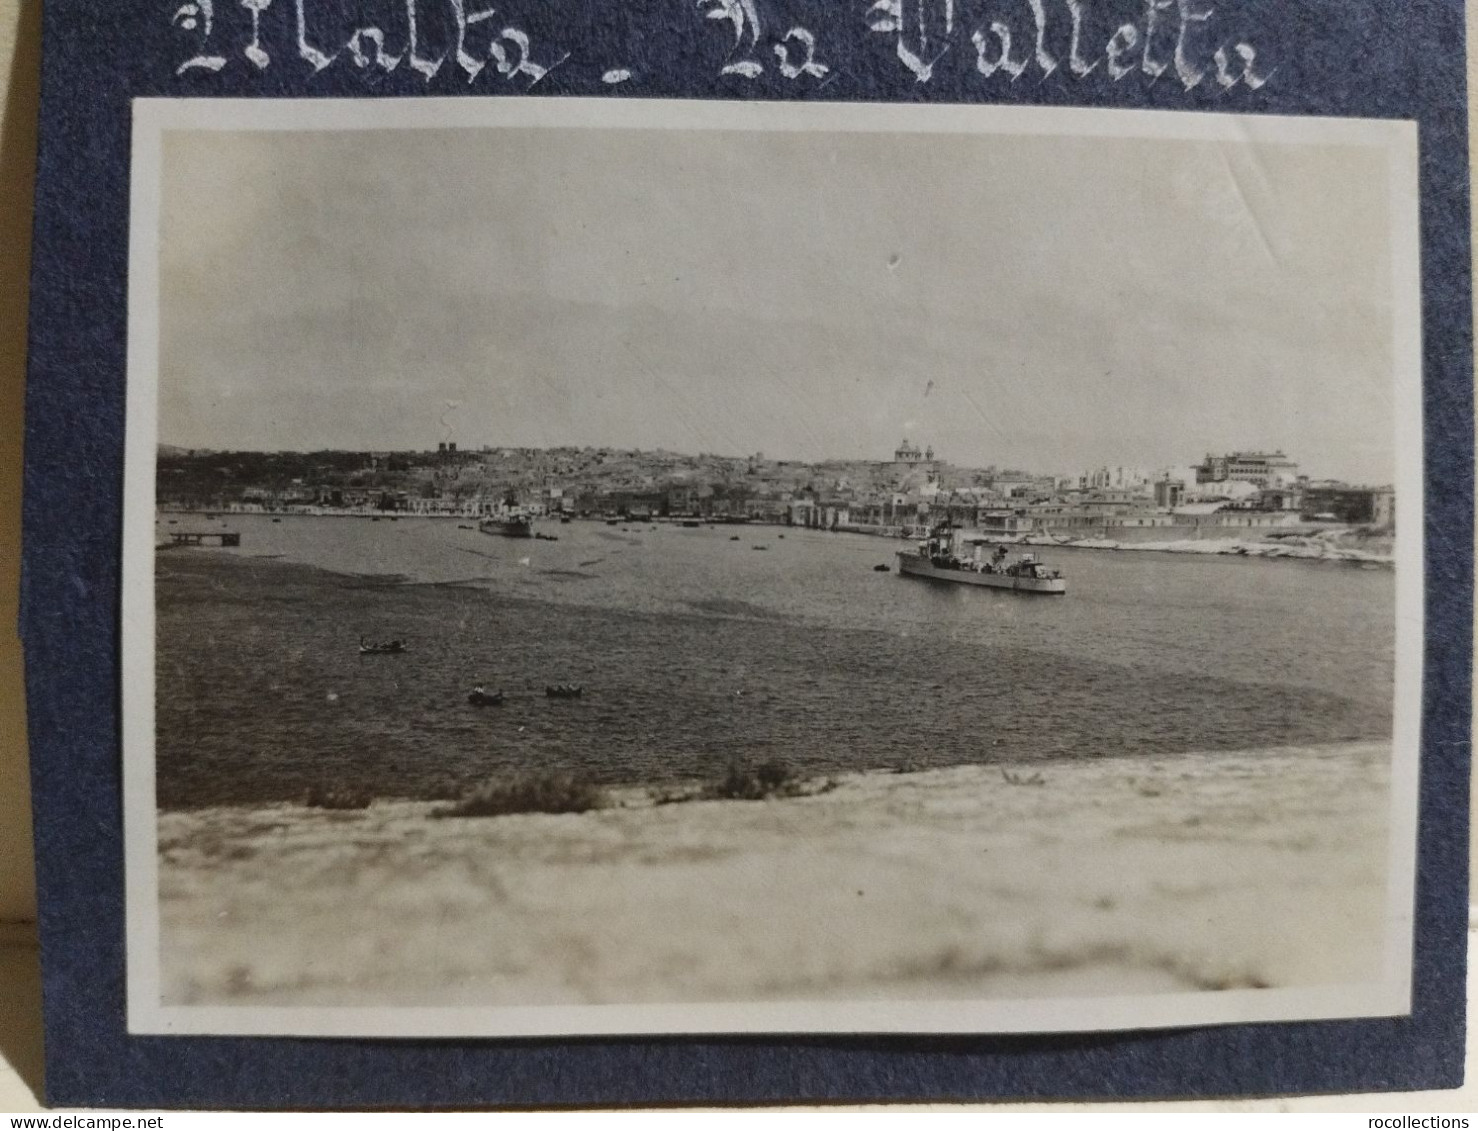 Malta Photo LA VALLETTA 1925. 80x55 Mm - Europe